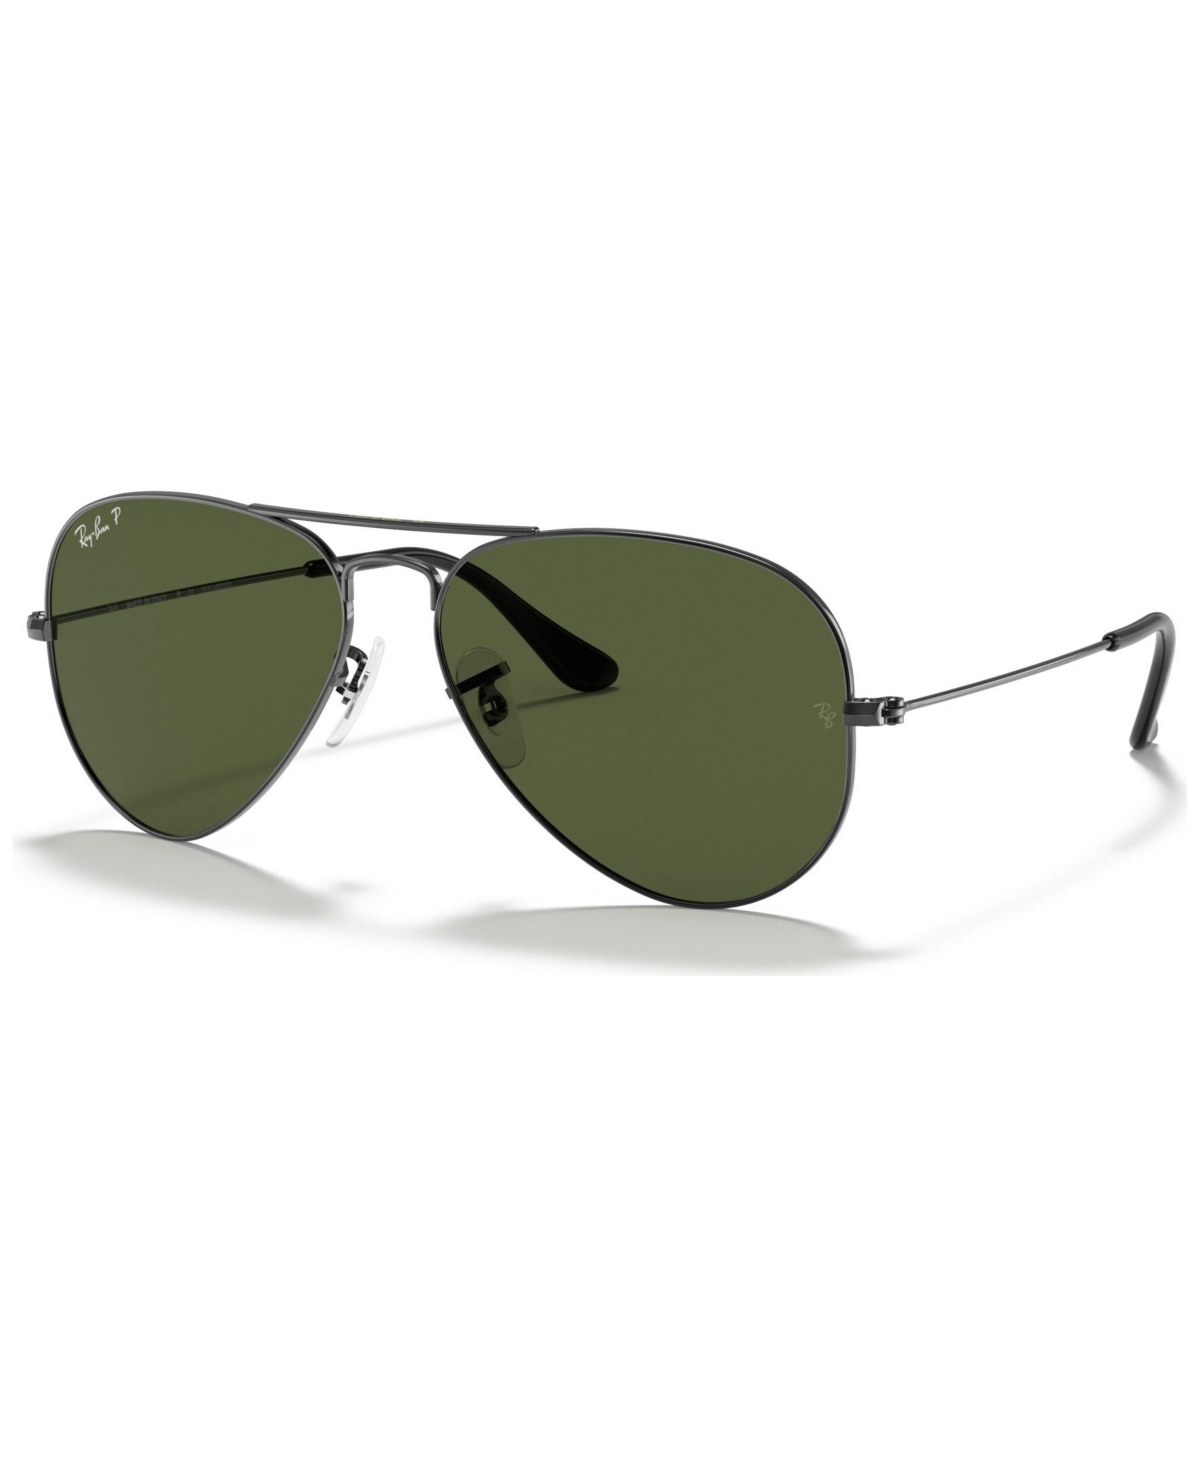 Ray-Ban Unisex Polarized Sunglasses, RB3025 Aviator Classic